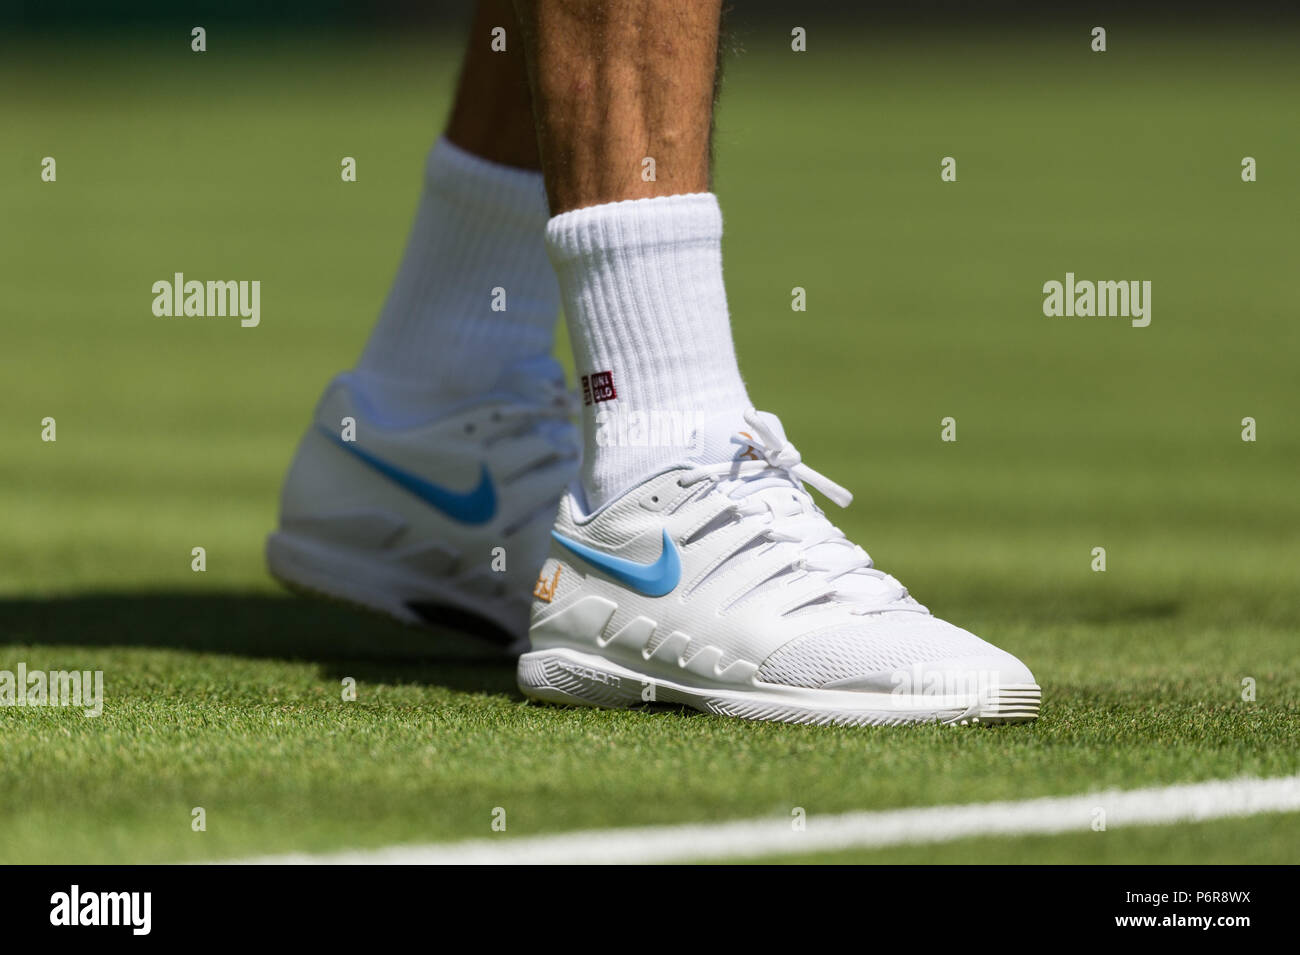 Wimbledon, Londres, Reino Unido. El 2 julio, 2018. Federer Rogder cerca del corte de césped Nike zapatos en los Campeonatos de Tenis de Wimbledon 2018, Londres, Reino Unido. Crédito: Raymond Tang/Alamy